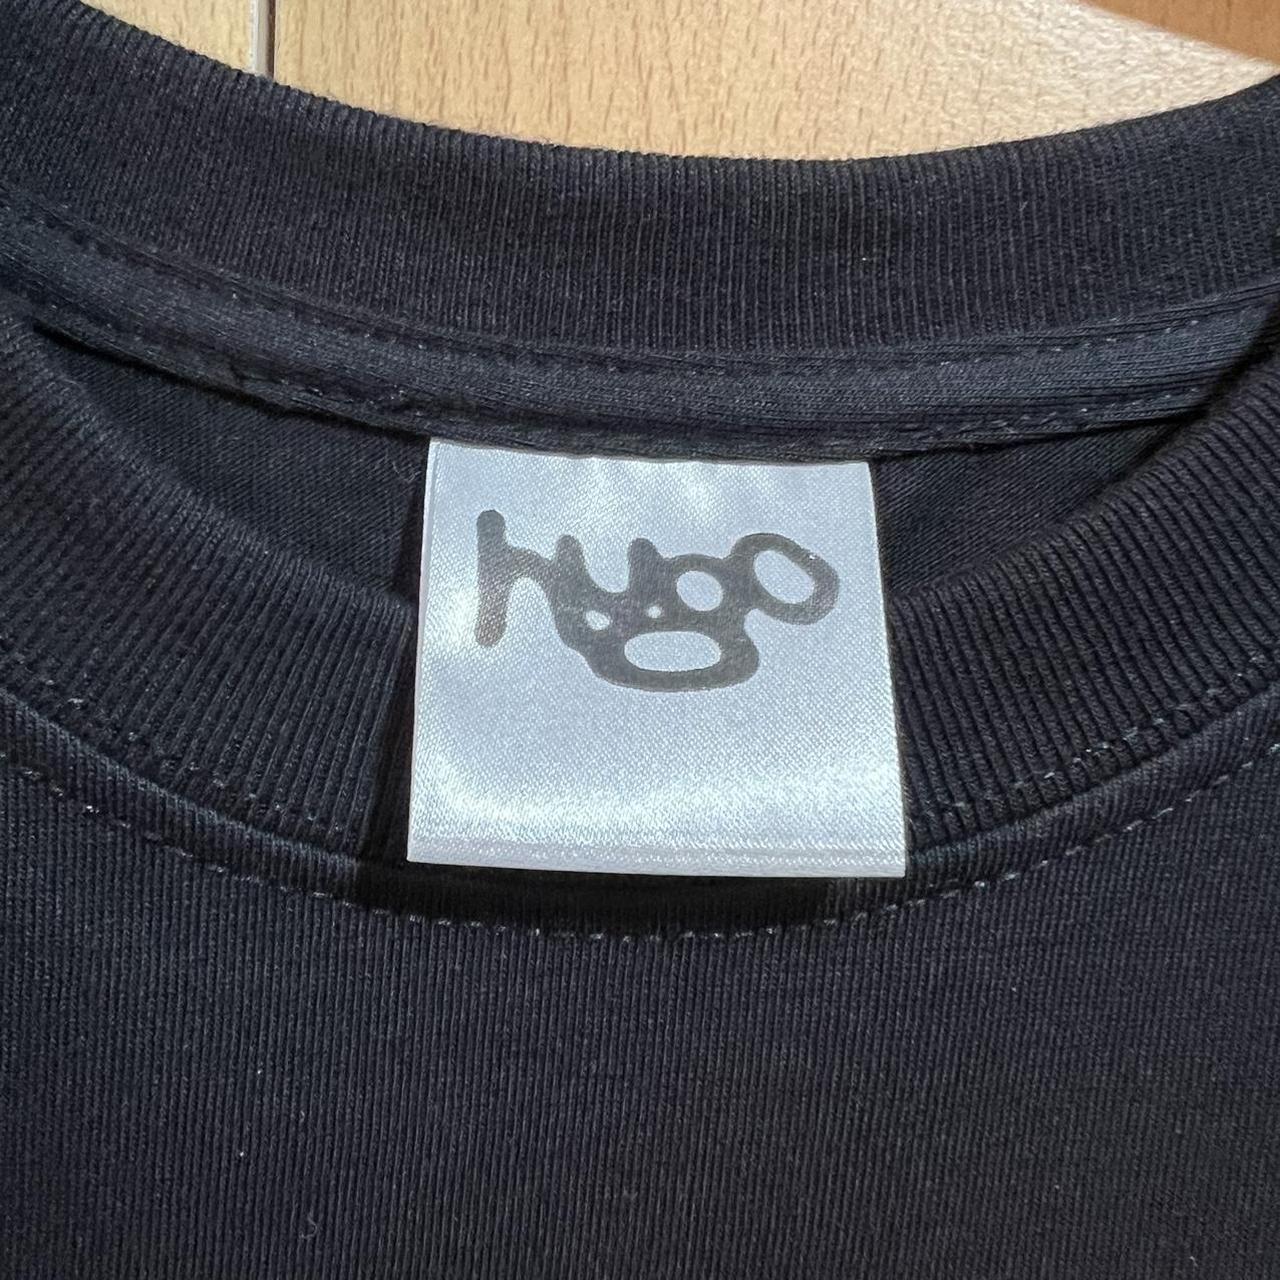 Loyle Carner HUGO London pop up merch T-Shirt Size... - Depop